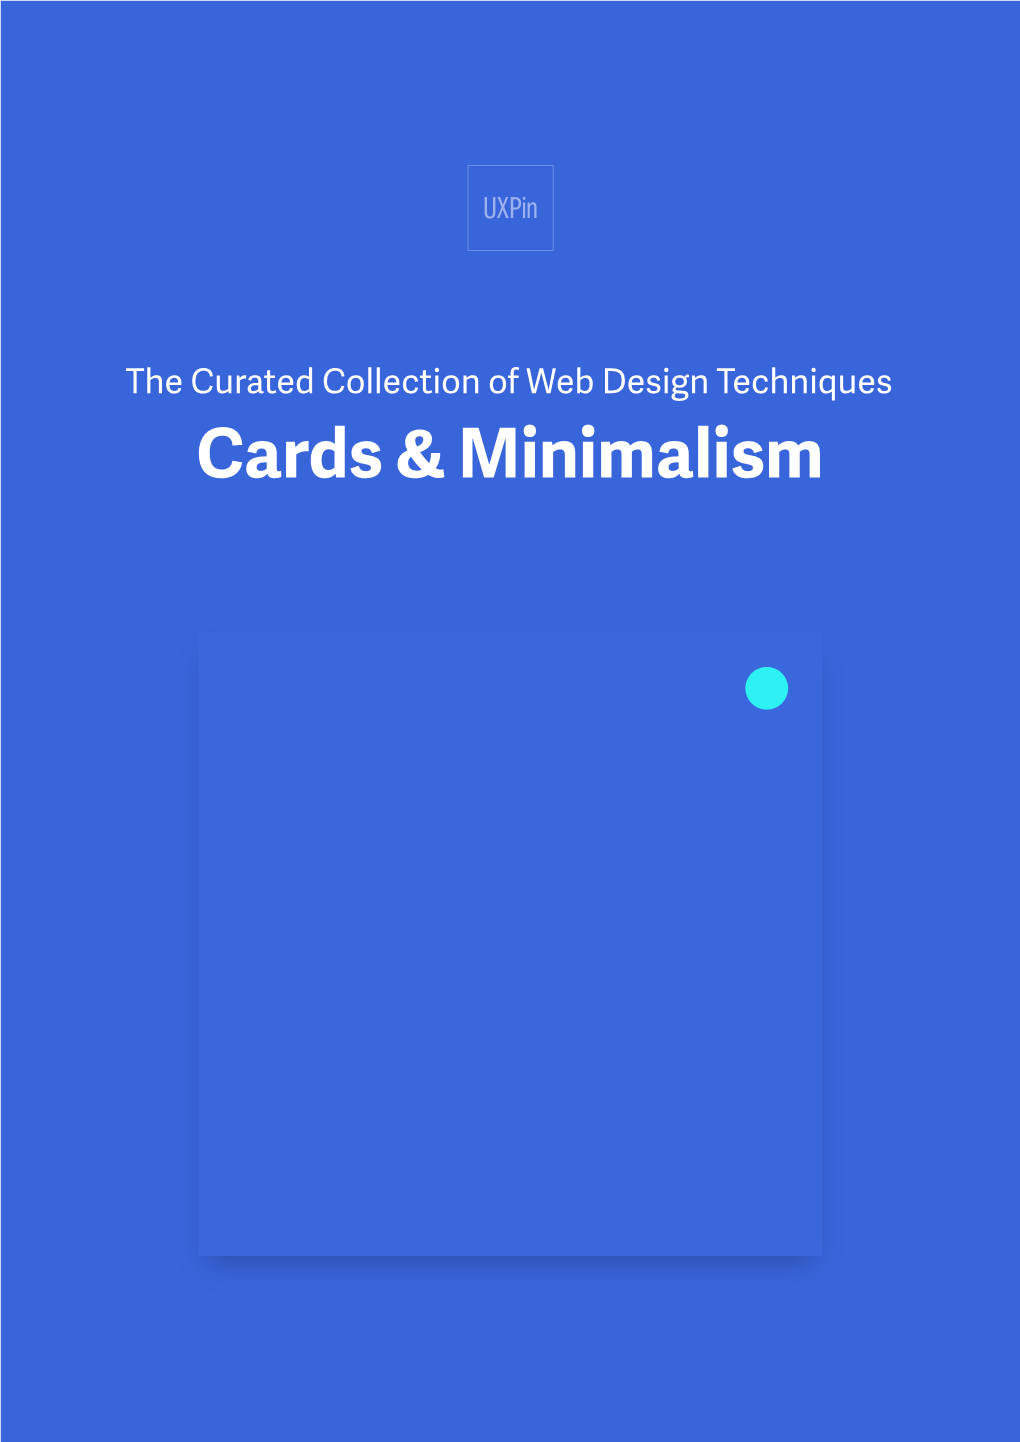 Cards & Minimalism